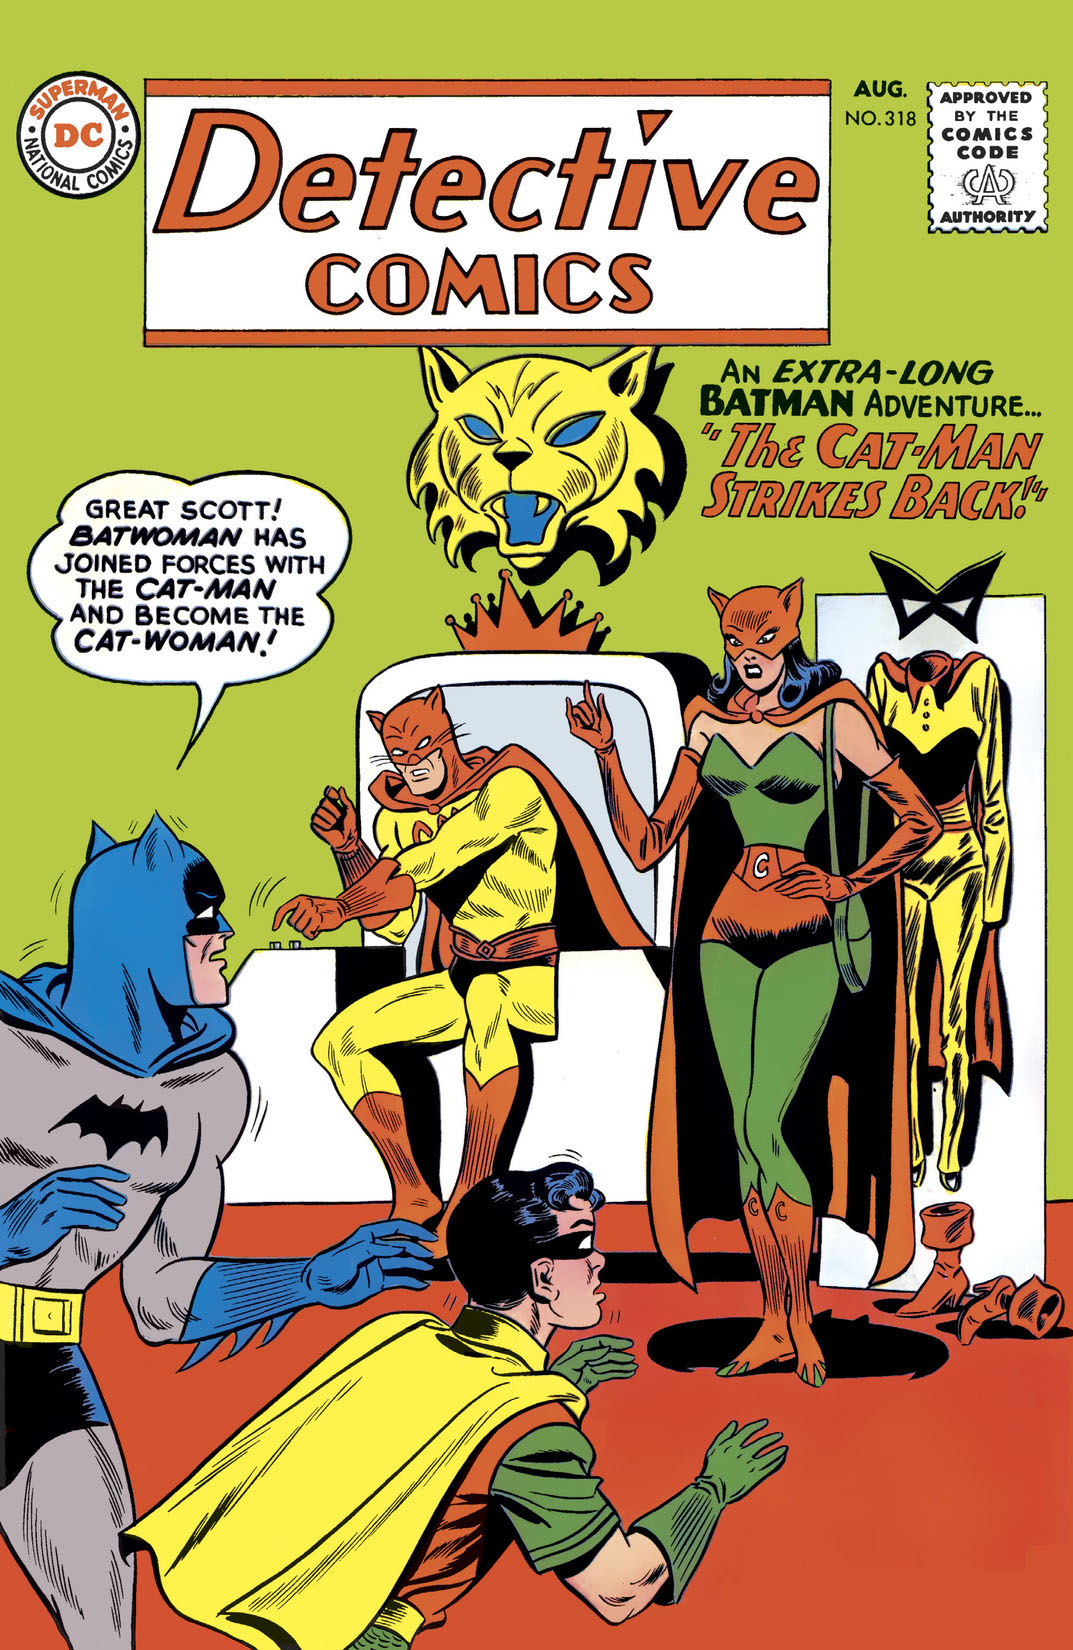 Detective Comics (1937-) #318 preview images